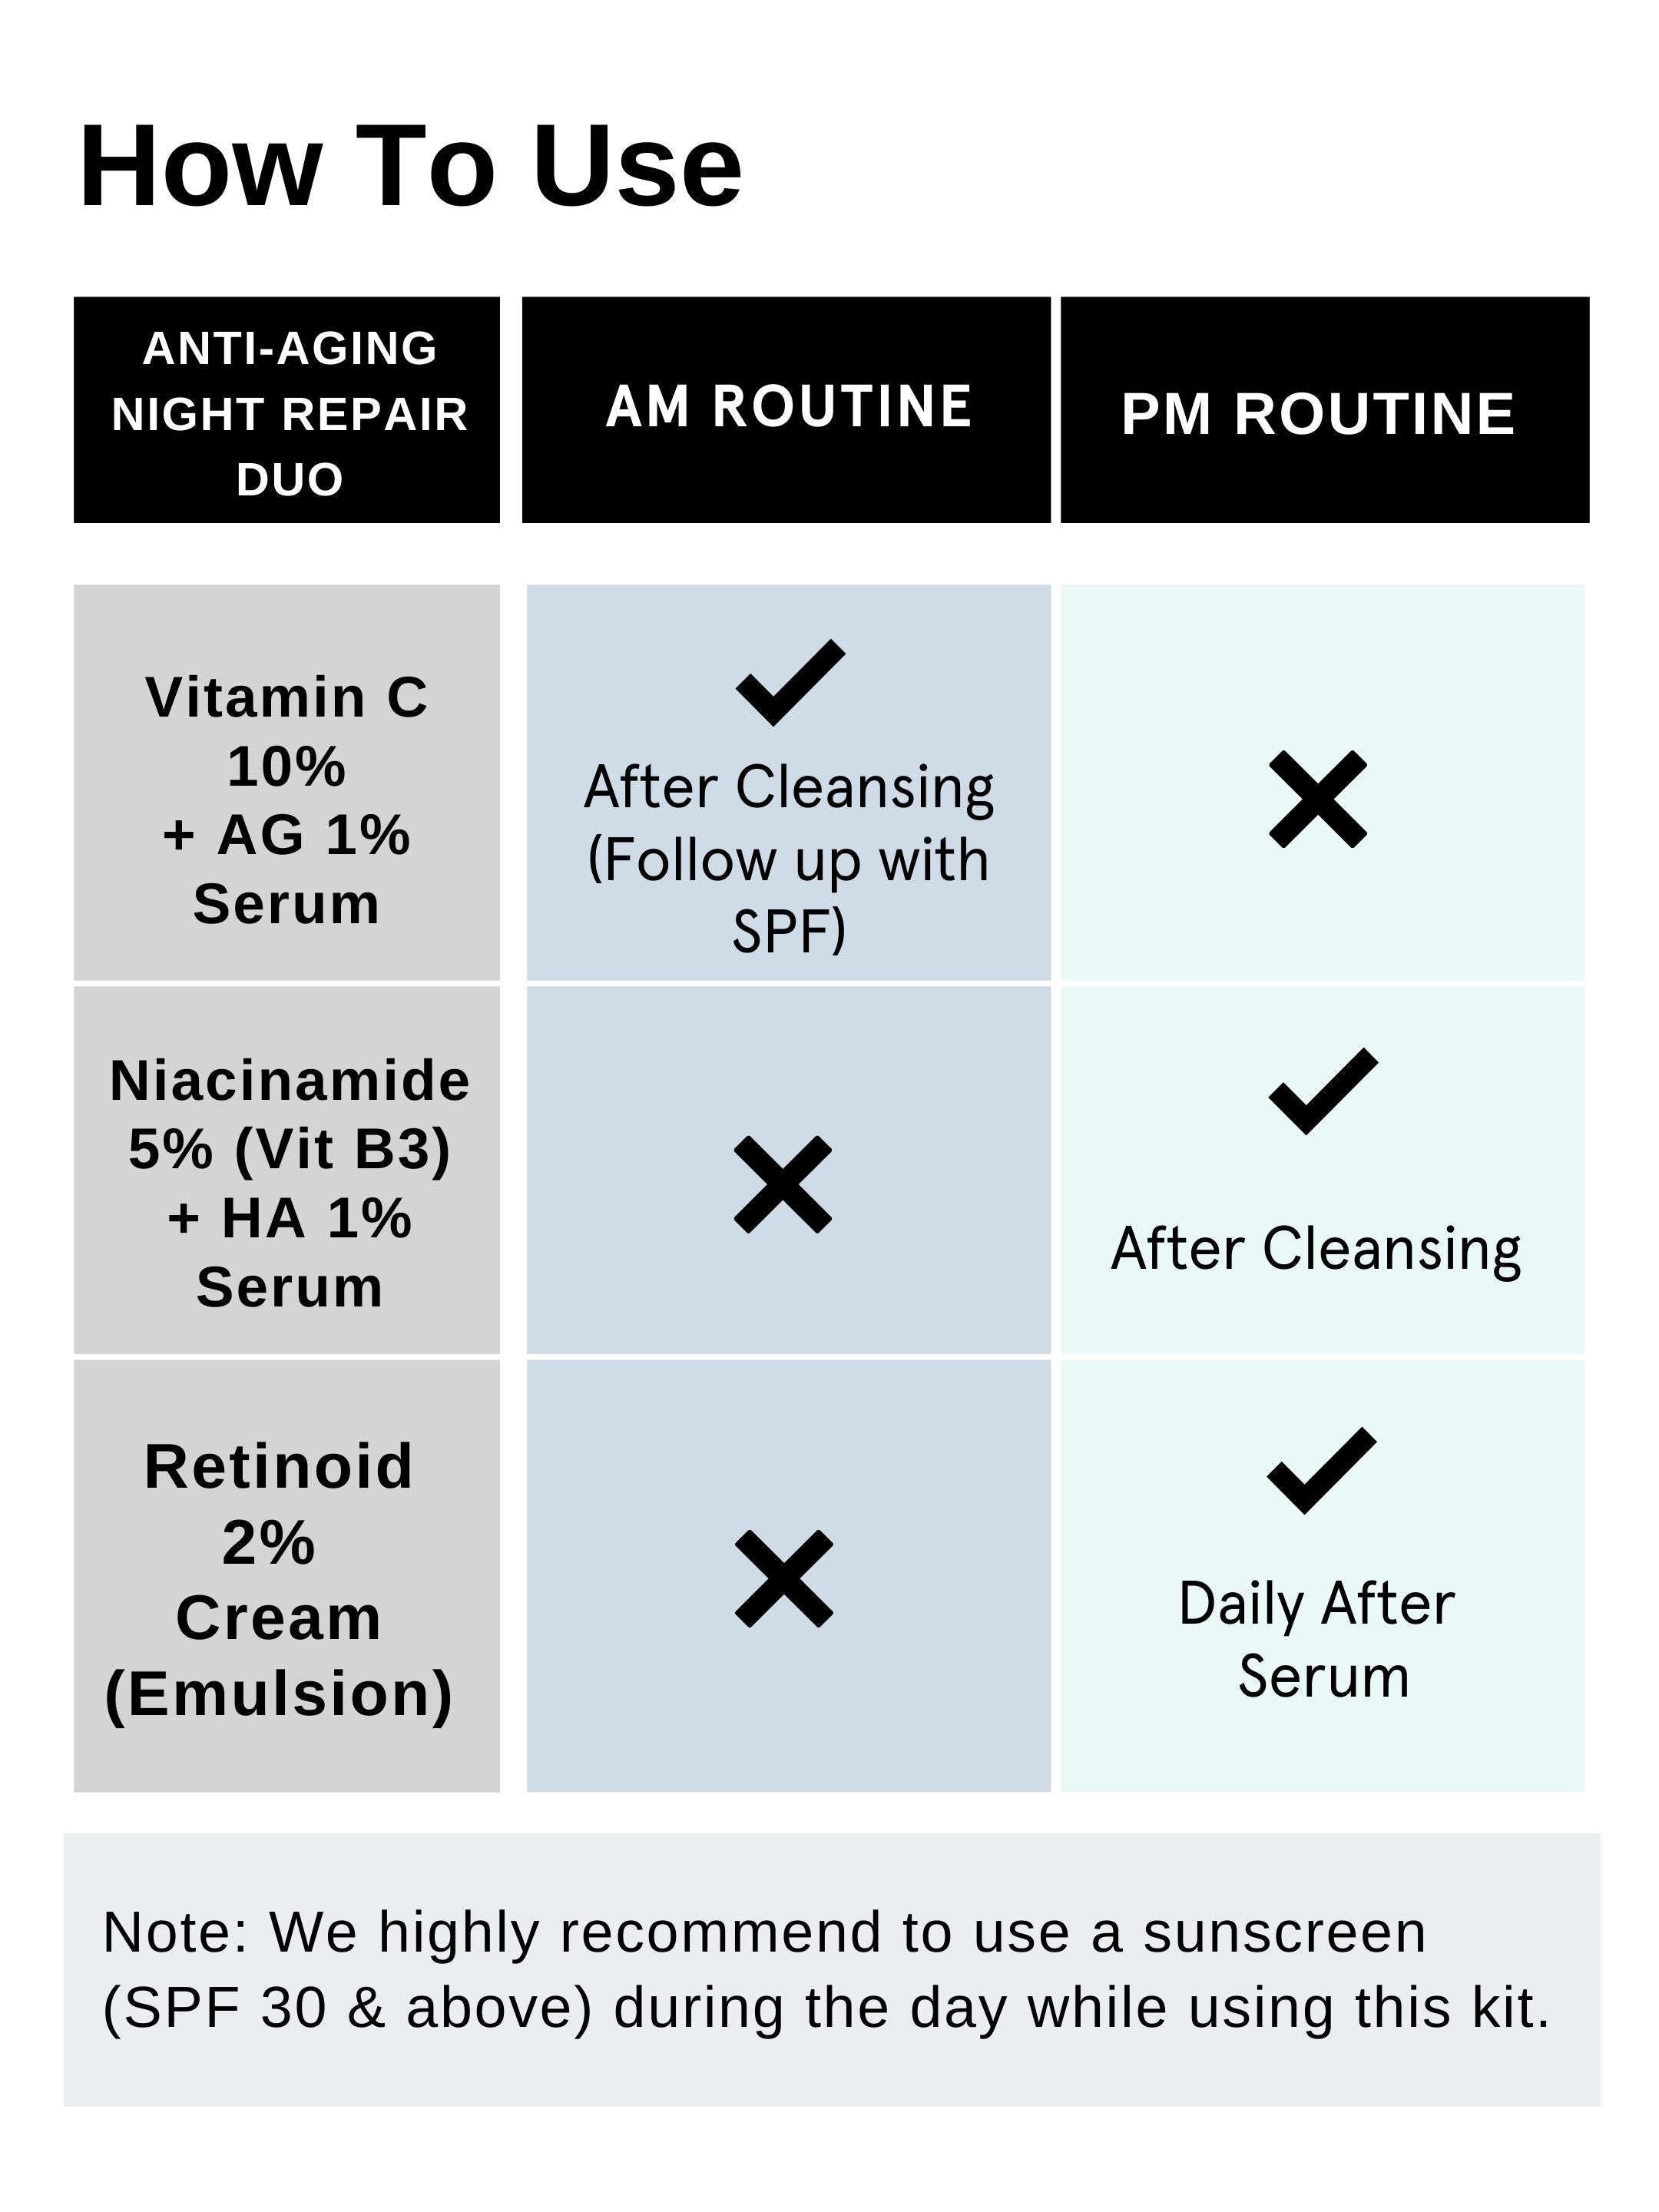 Minimalist Daily Multi Vitamin (A, B3 & C) Dose For Healthy & Glowing Skin